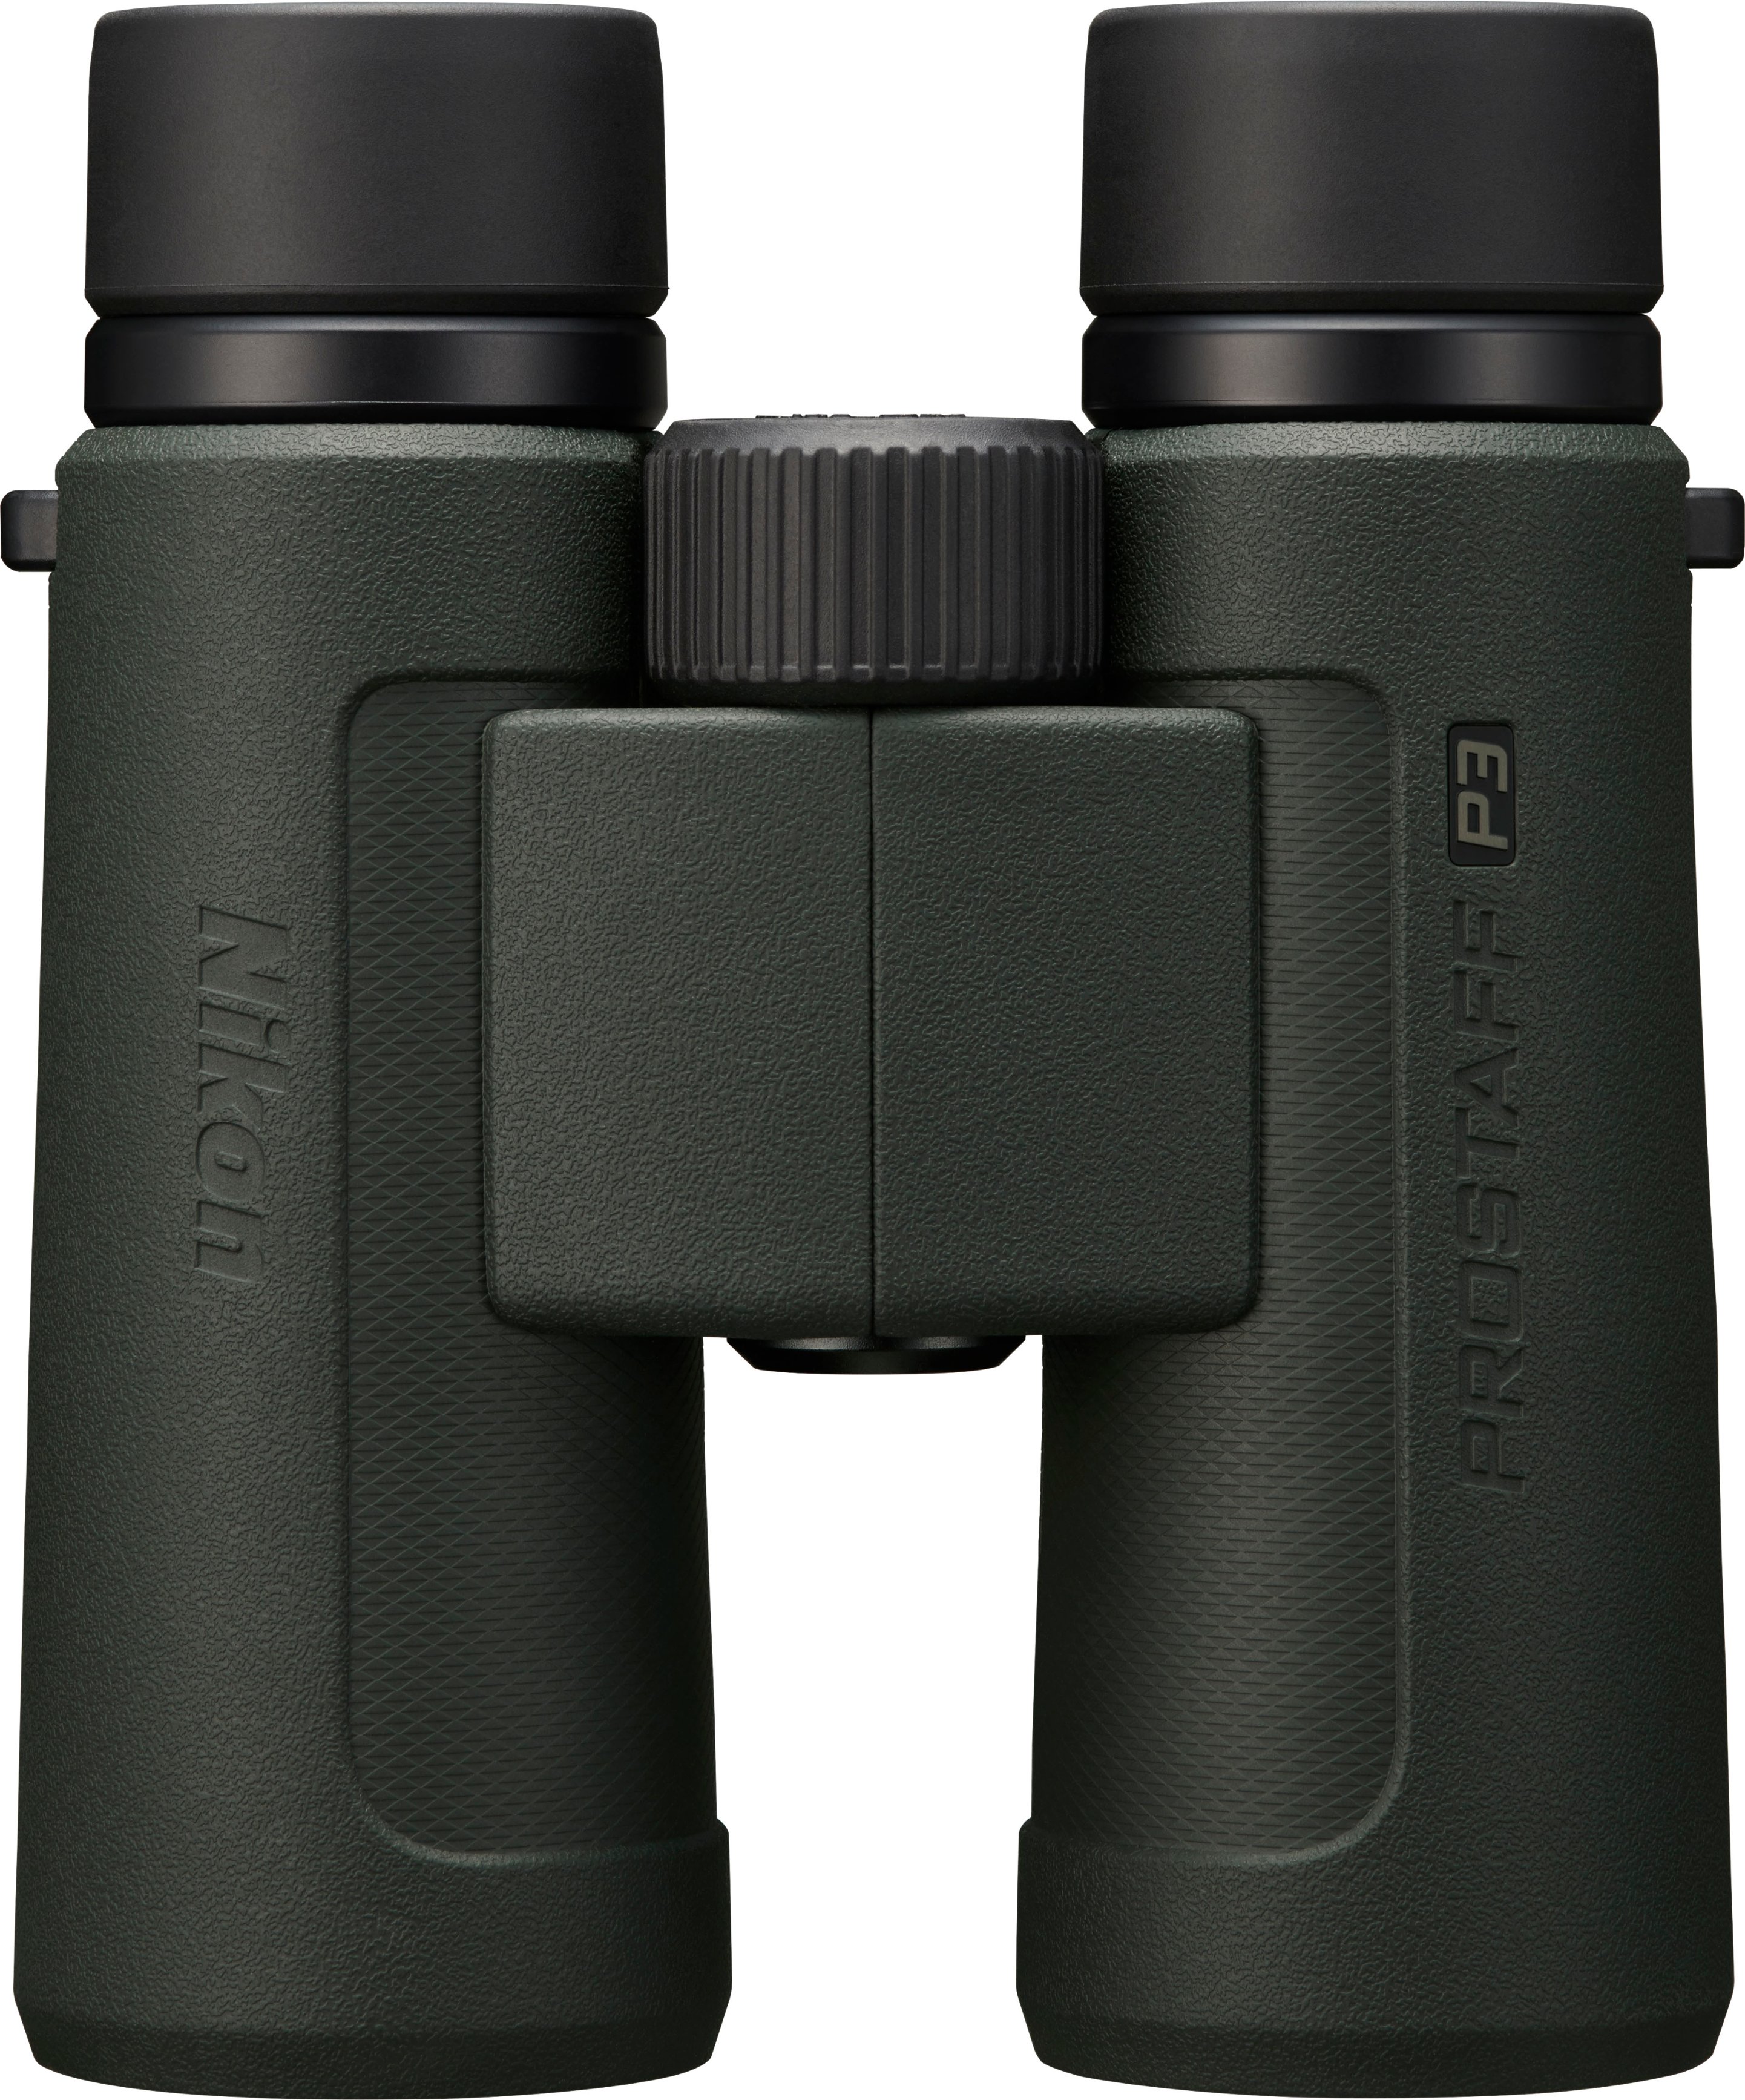 Angle View: Nikon - PROSTAFF P3 10X42 Waterproof Binoculars - Green